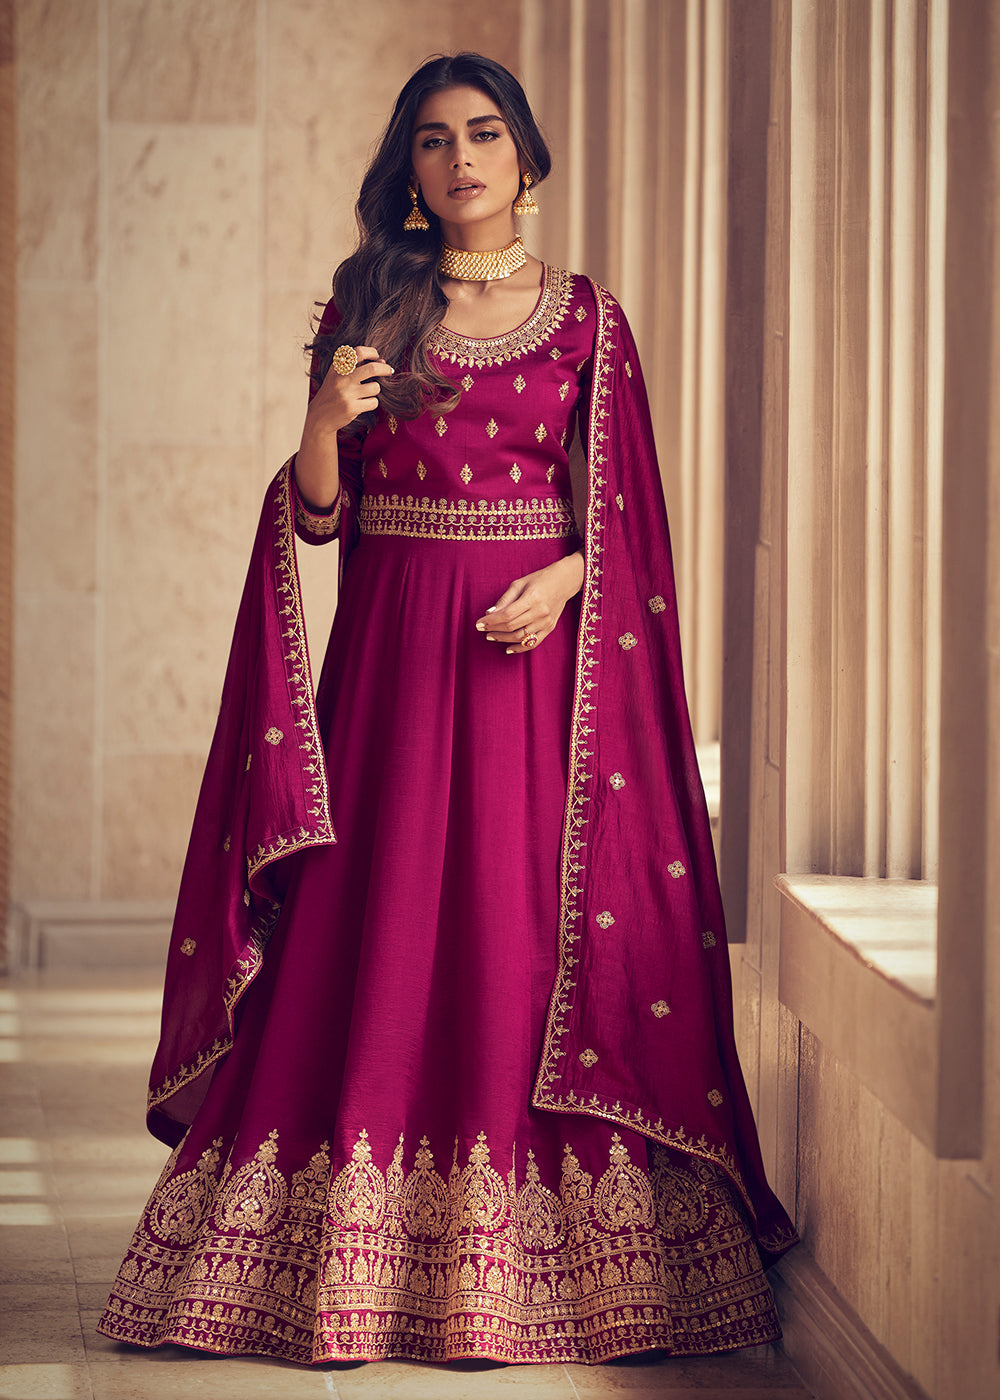 Buy Now Designer Magenta Pink Silk Floor Length Anarkali Suit Online in USA, UK, Australia, New Zealand, Canada & Worldwide at Empress Clothing. 